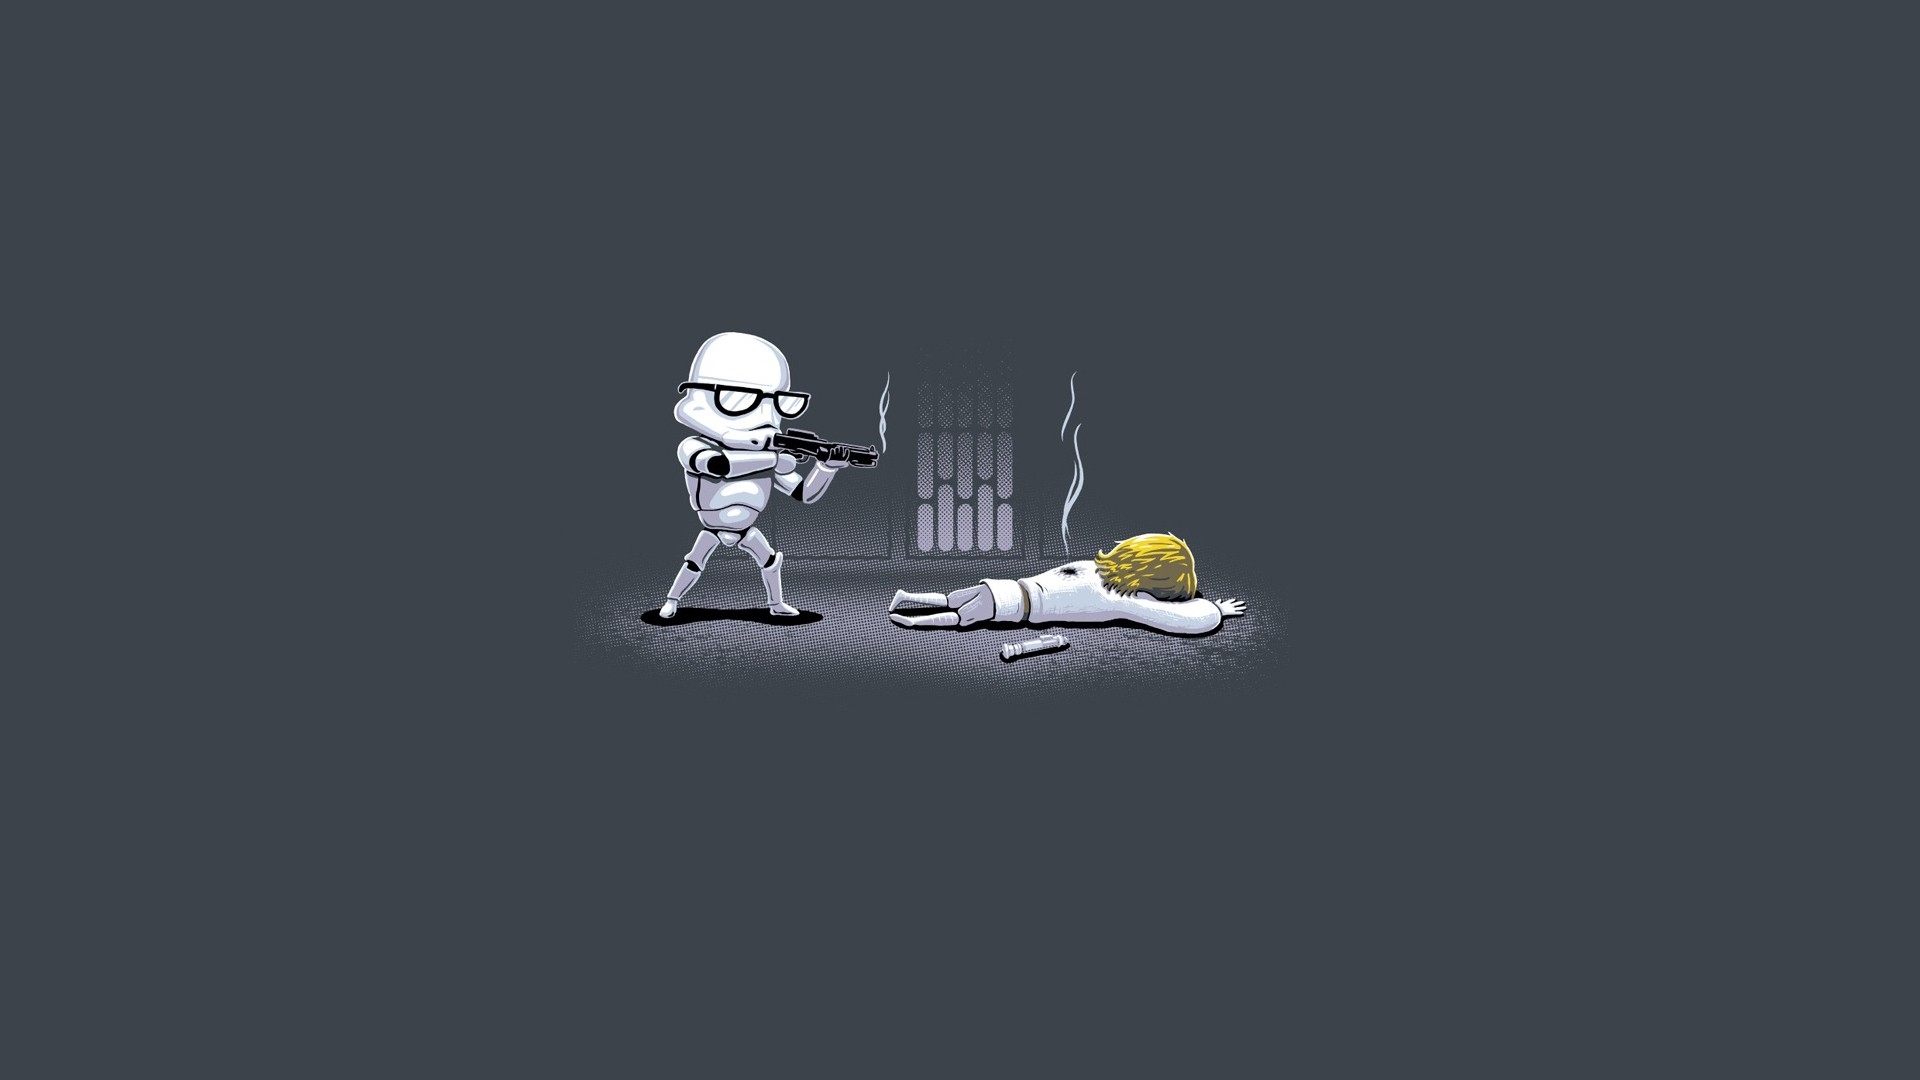 General 1920x1080 Star Wars minimalism simple background gray background dark humor movie characters